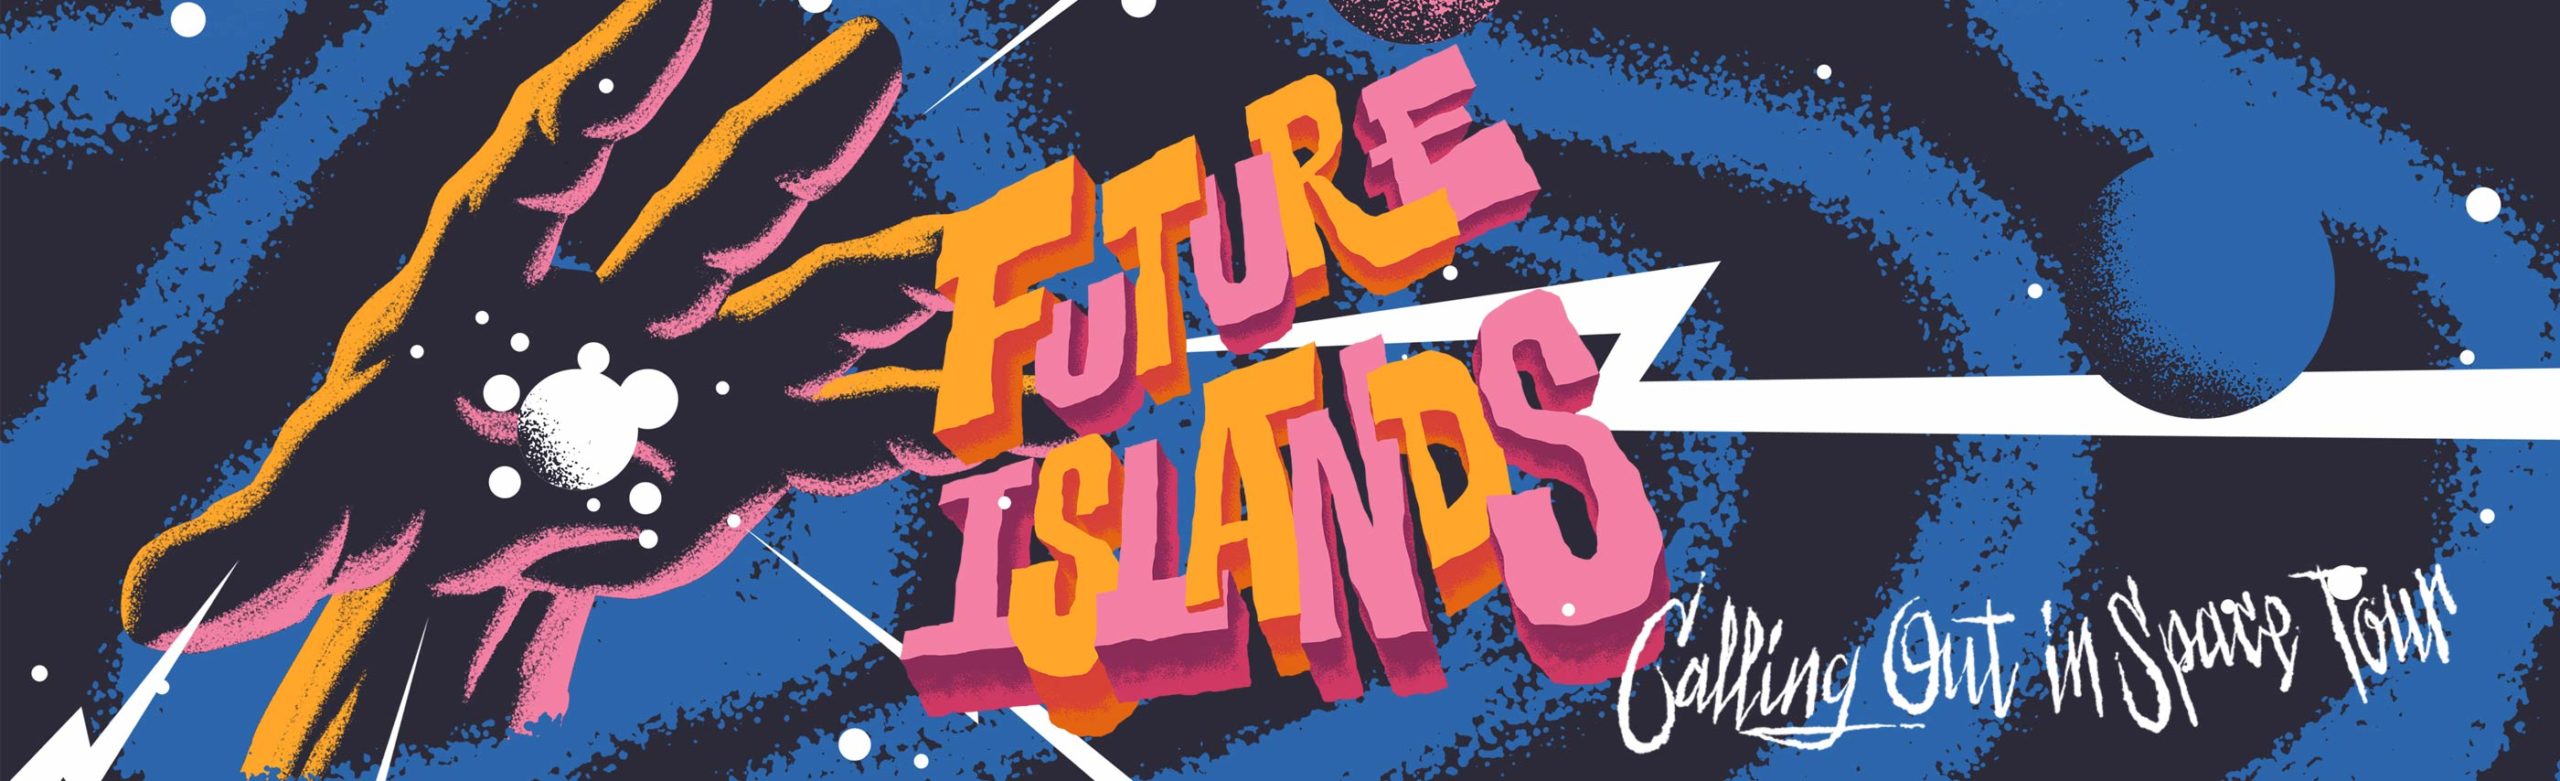 Future Islands Tickets + Logjam Swag Giveaway Image